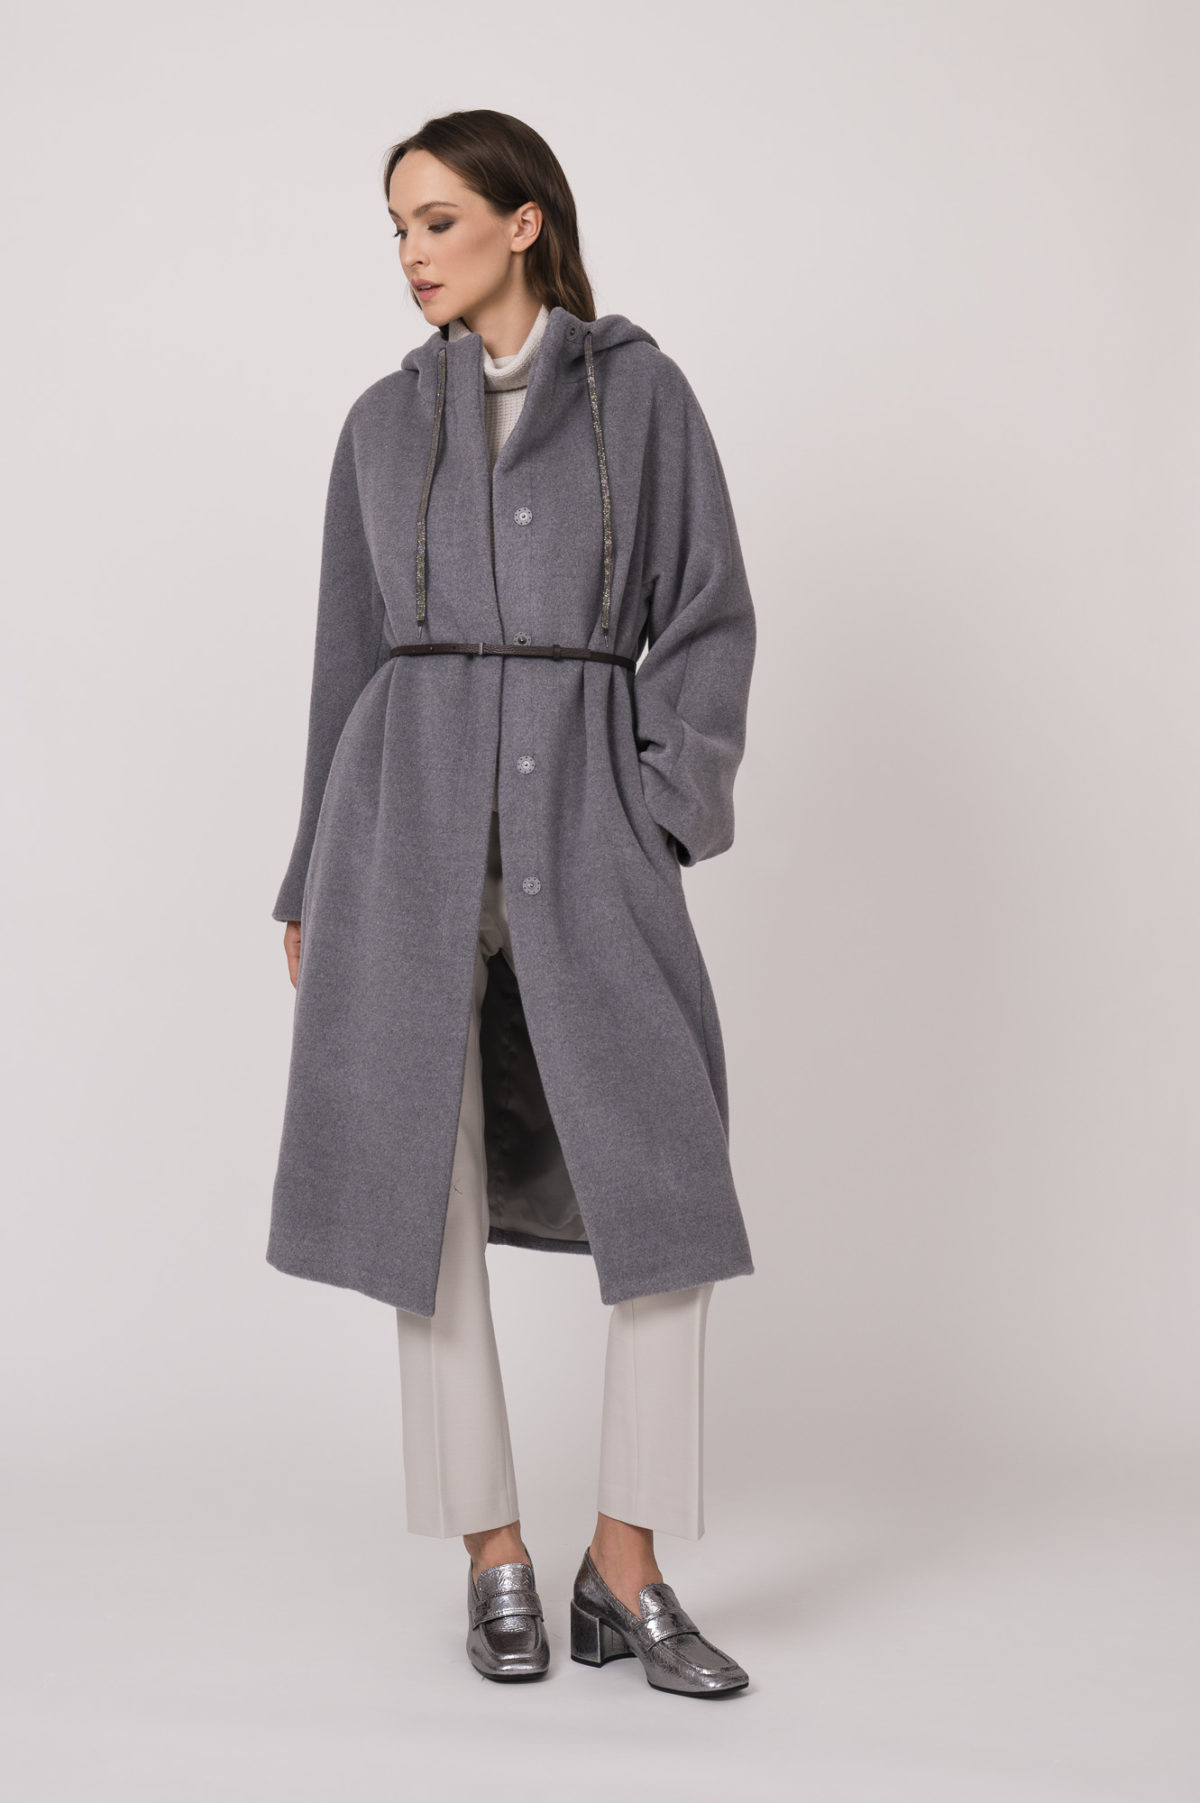 Mantel, Pullover und Hose der Marke Fabiana Filippi